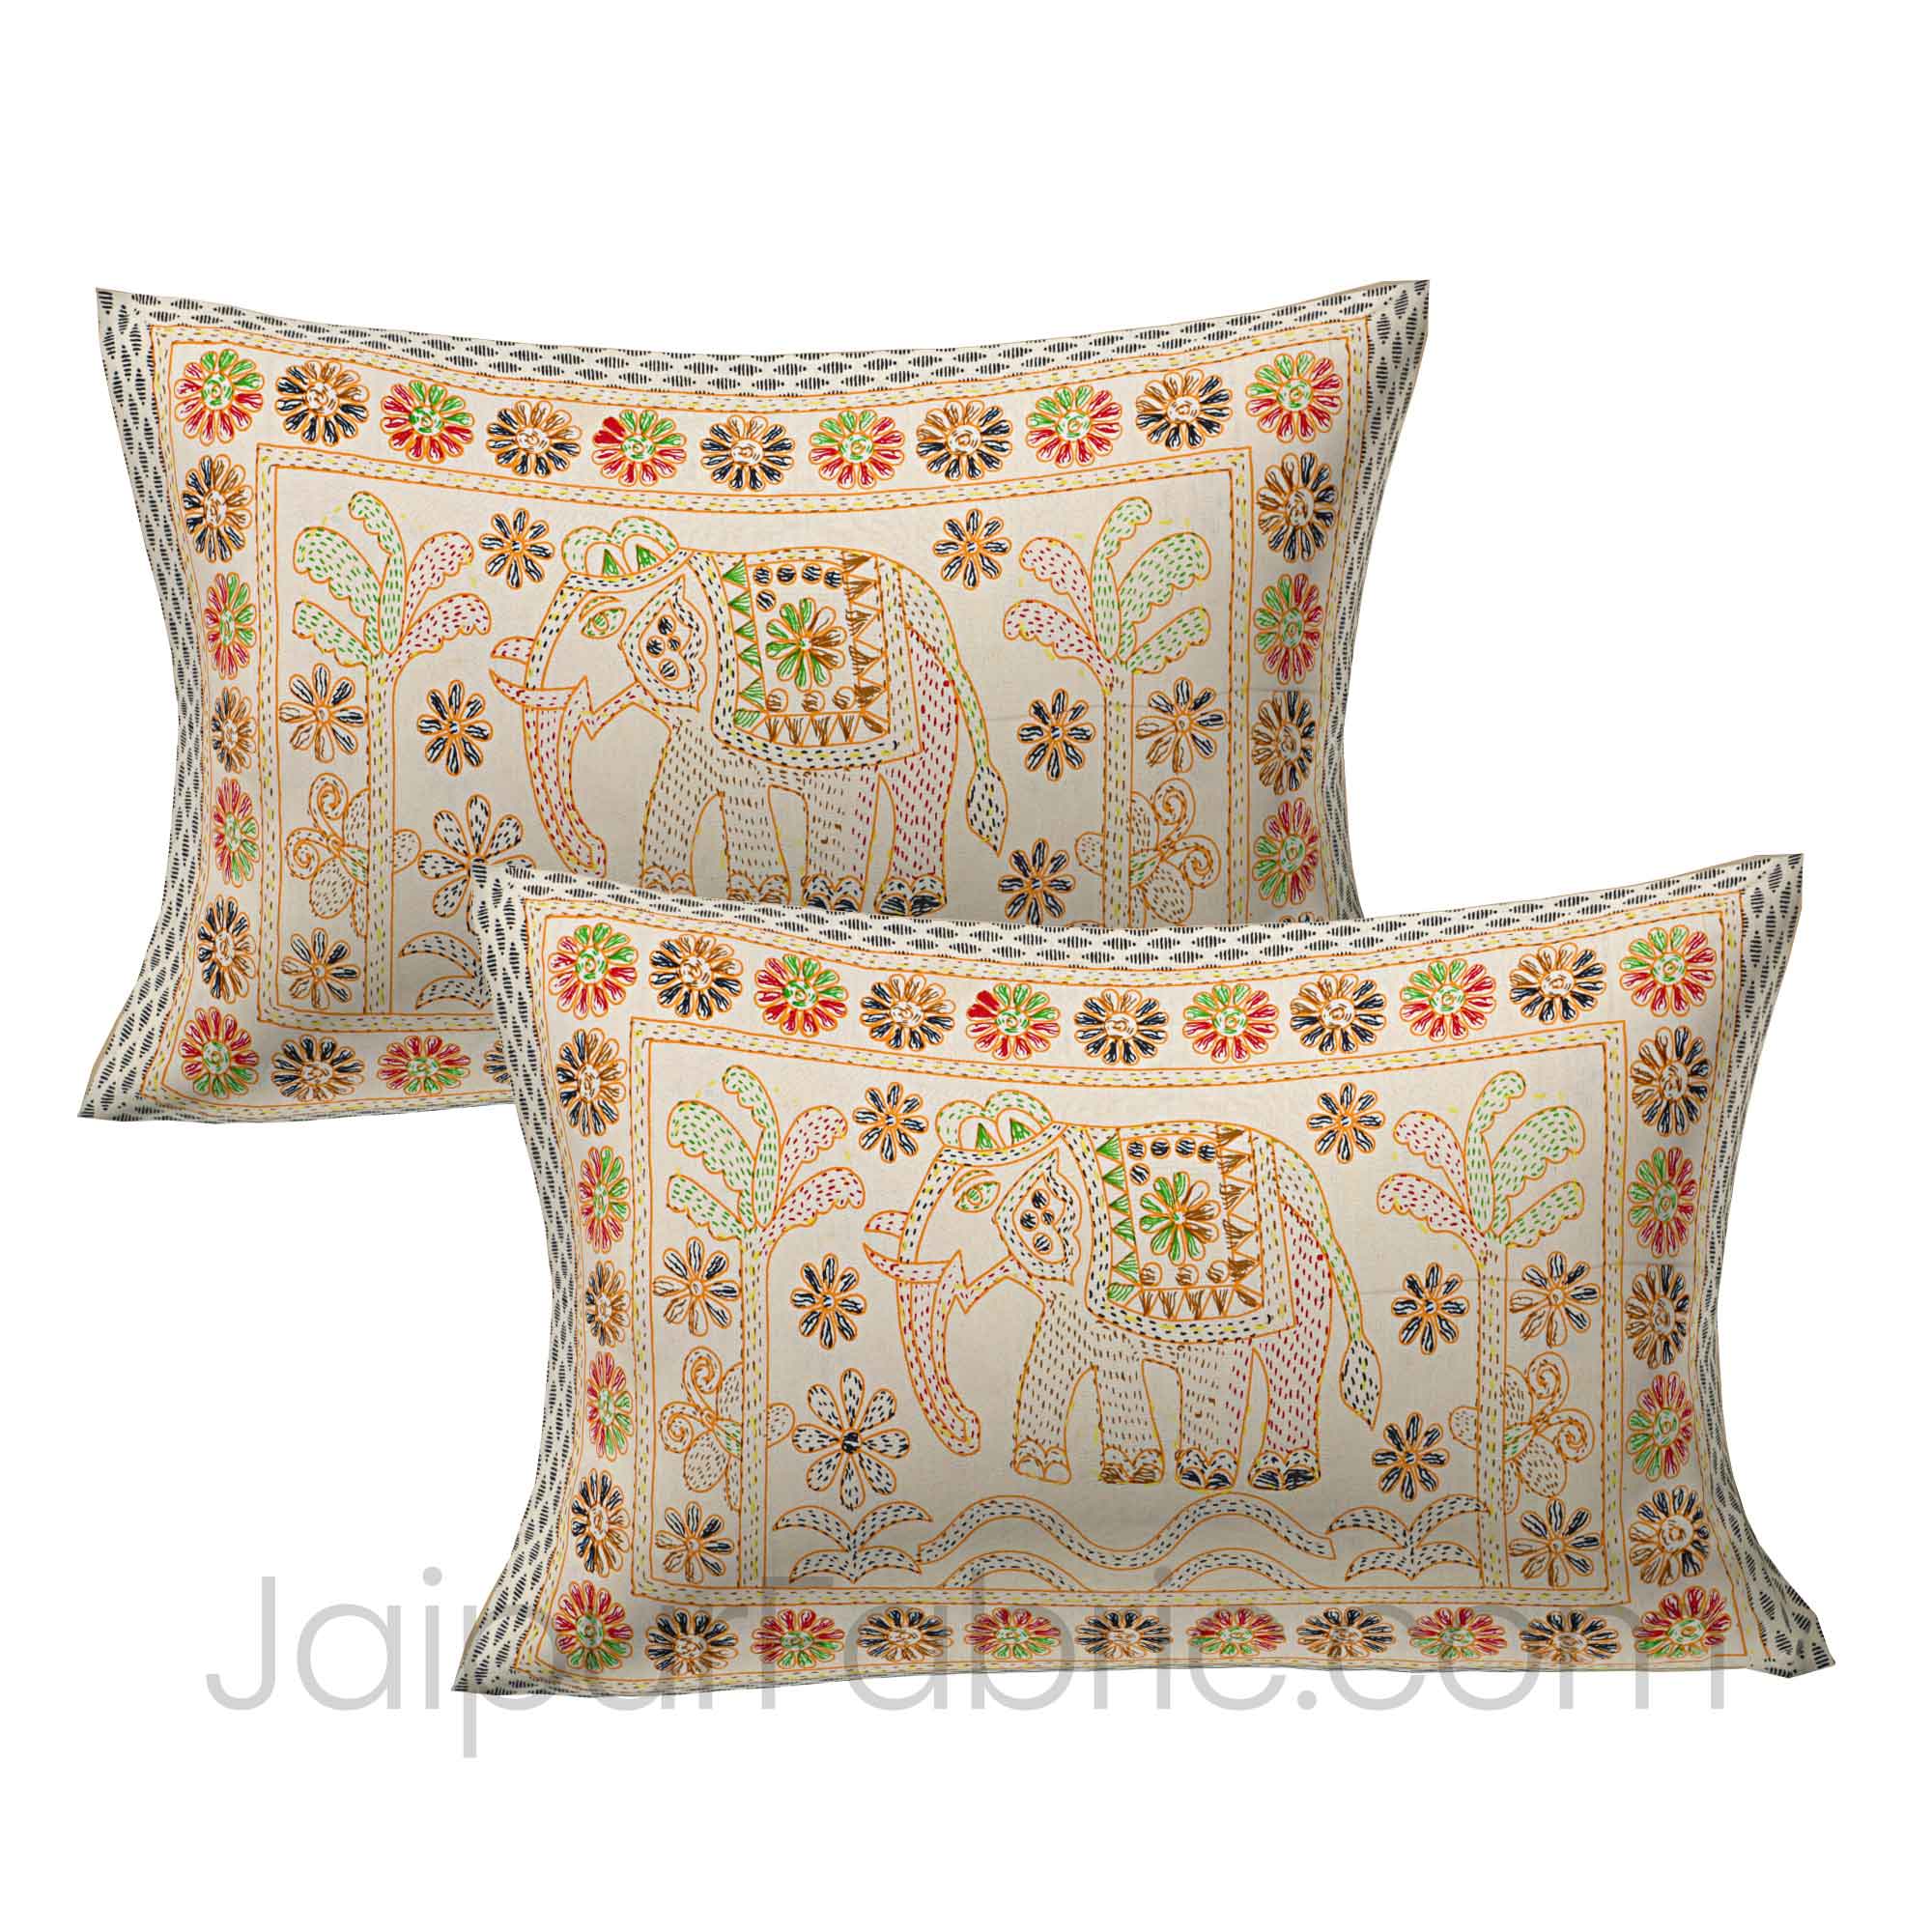 Beautiful Cream Kantha Thread Work Embroidery Double Bedsheet / Dohar / Light Blanket / Thin Comforter